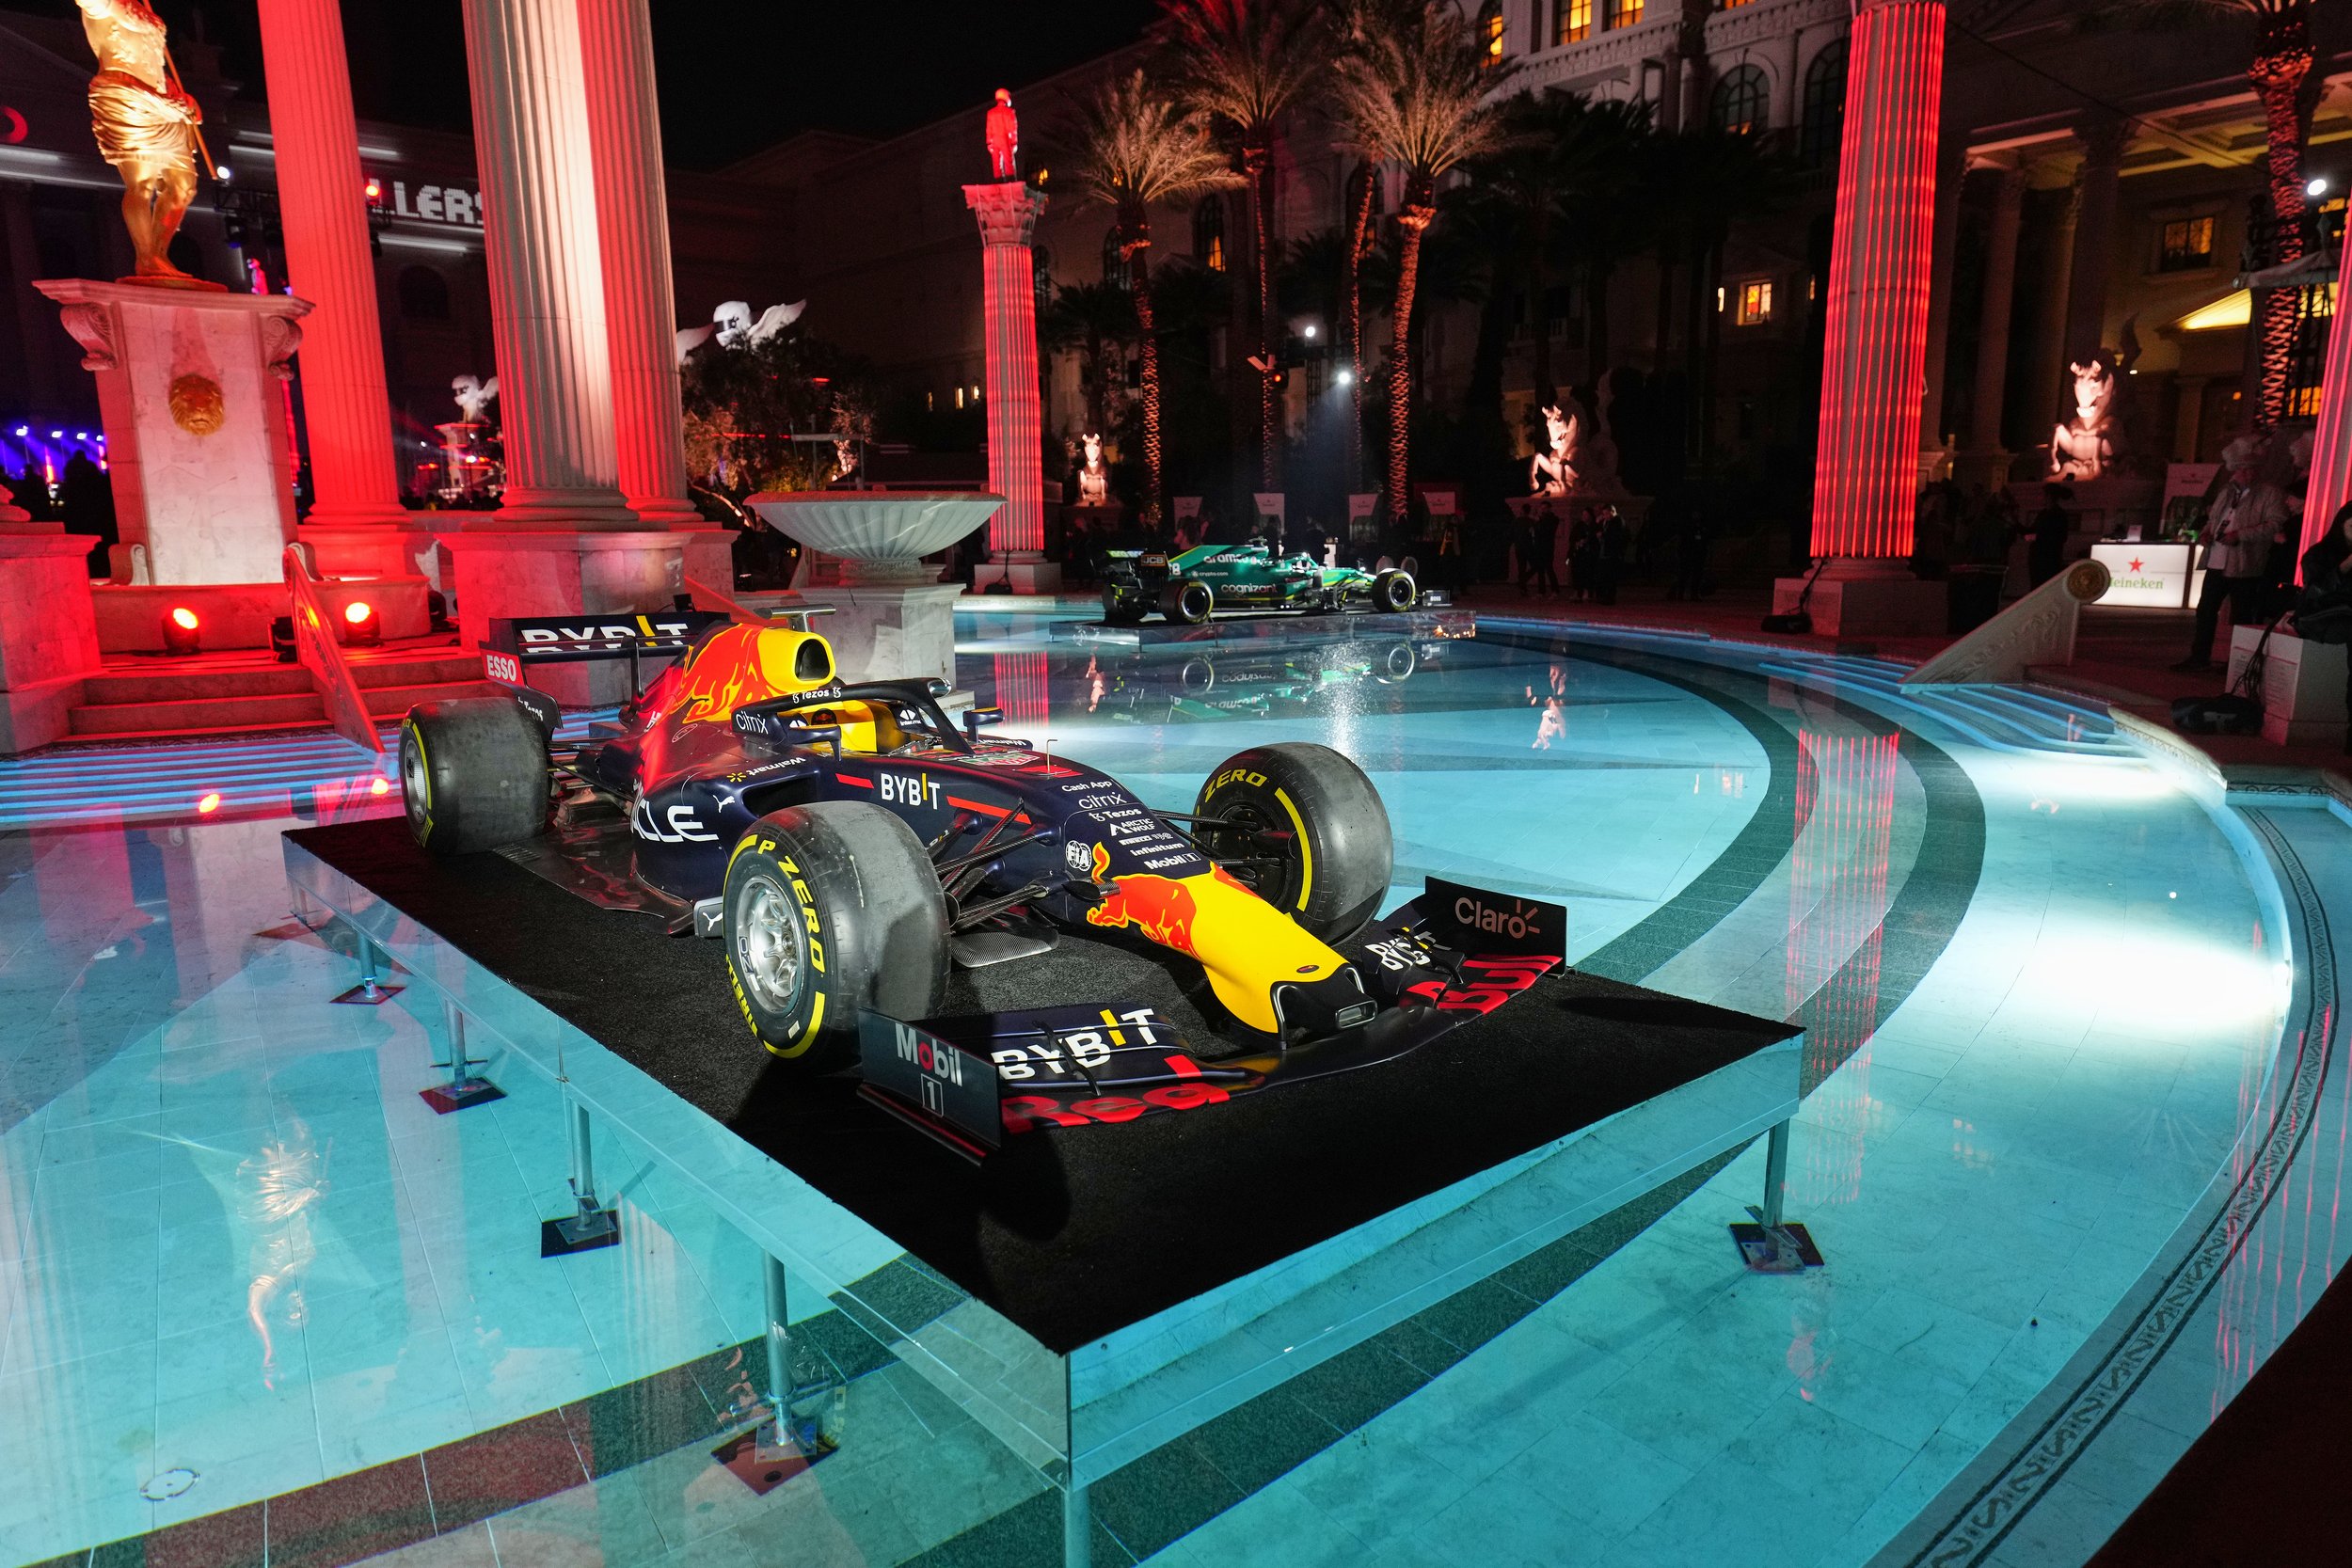 Race Highlights  2023 Las Vegas Grand Prix 